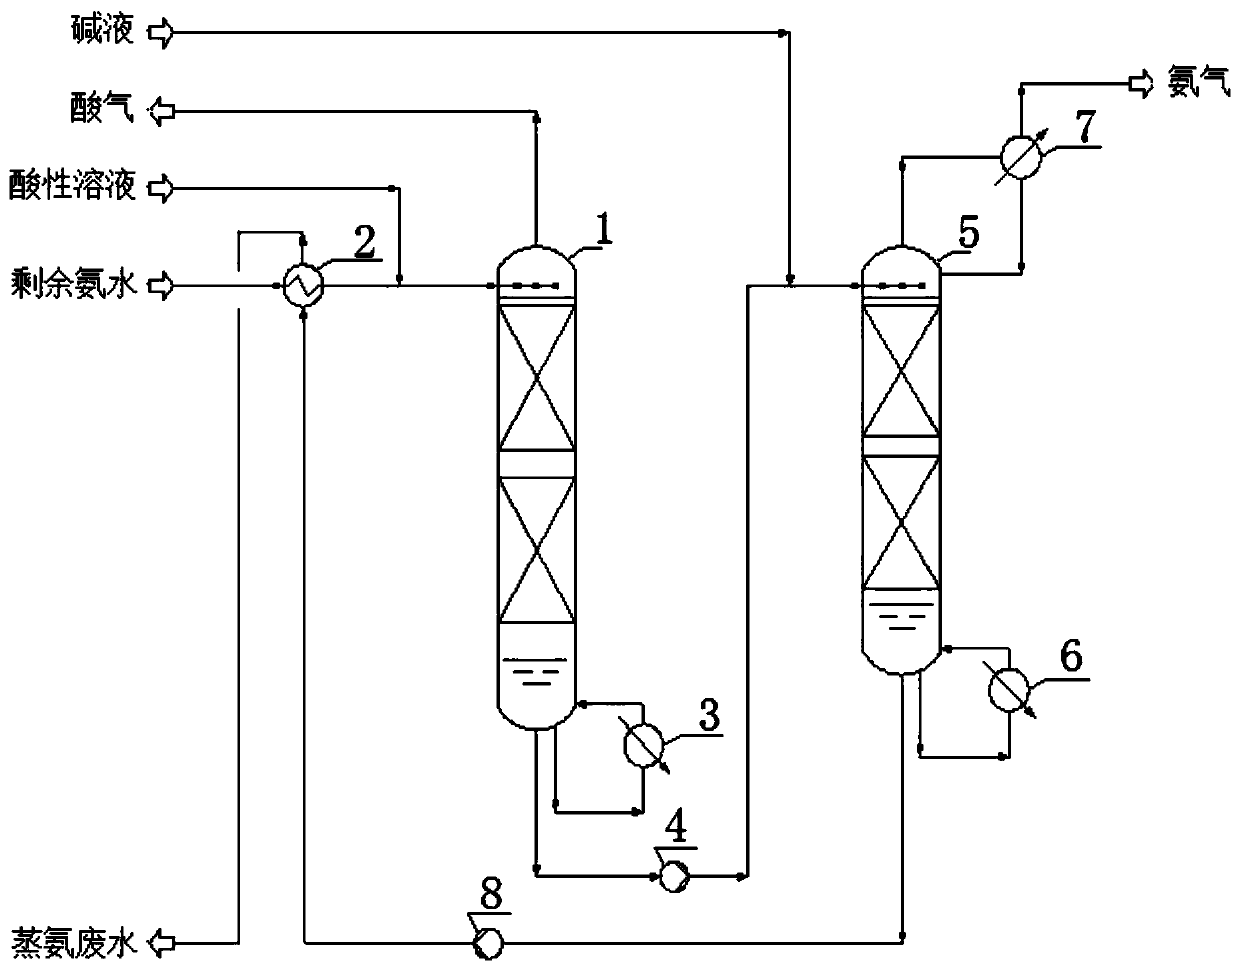 Process for producing refined ammonium hydroxide through deacidification of residual ammonium hydroxide